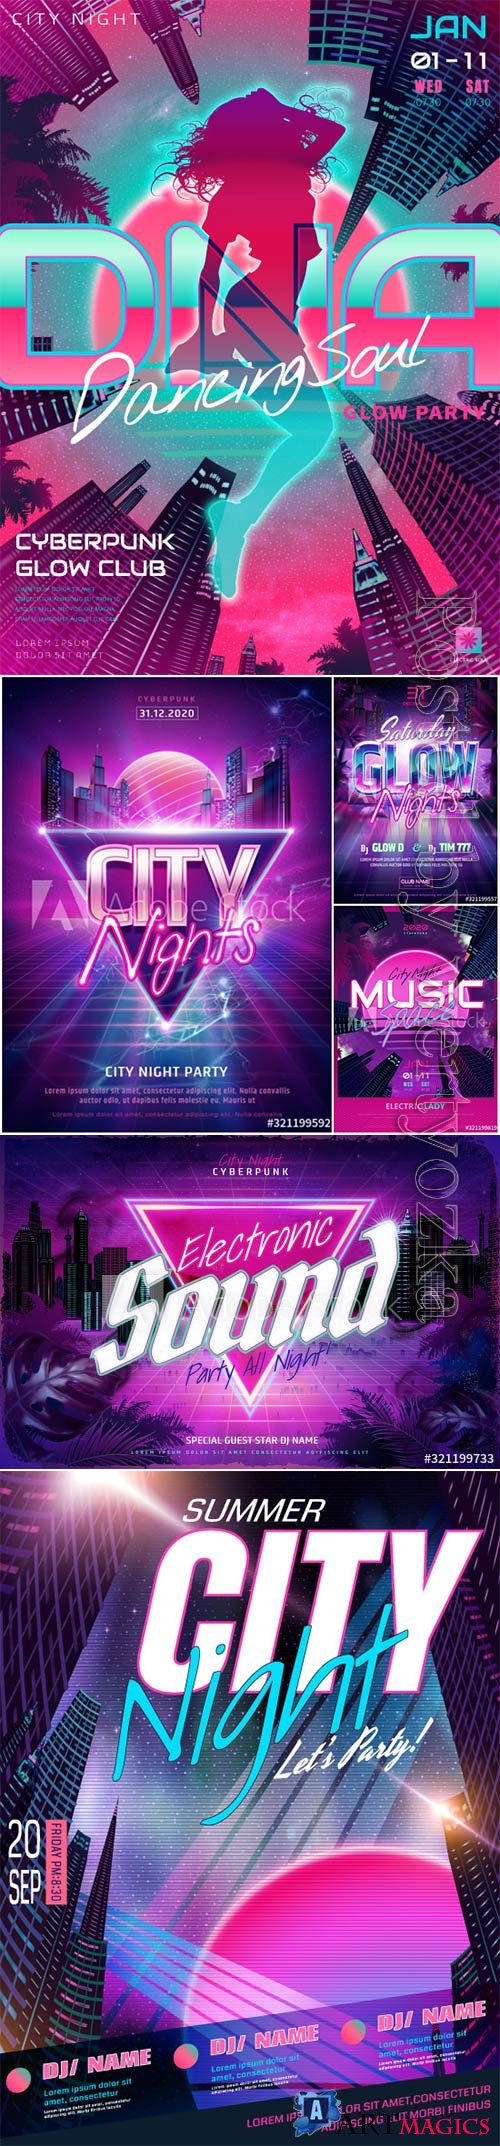 Vector music night poster